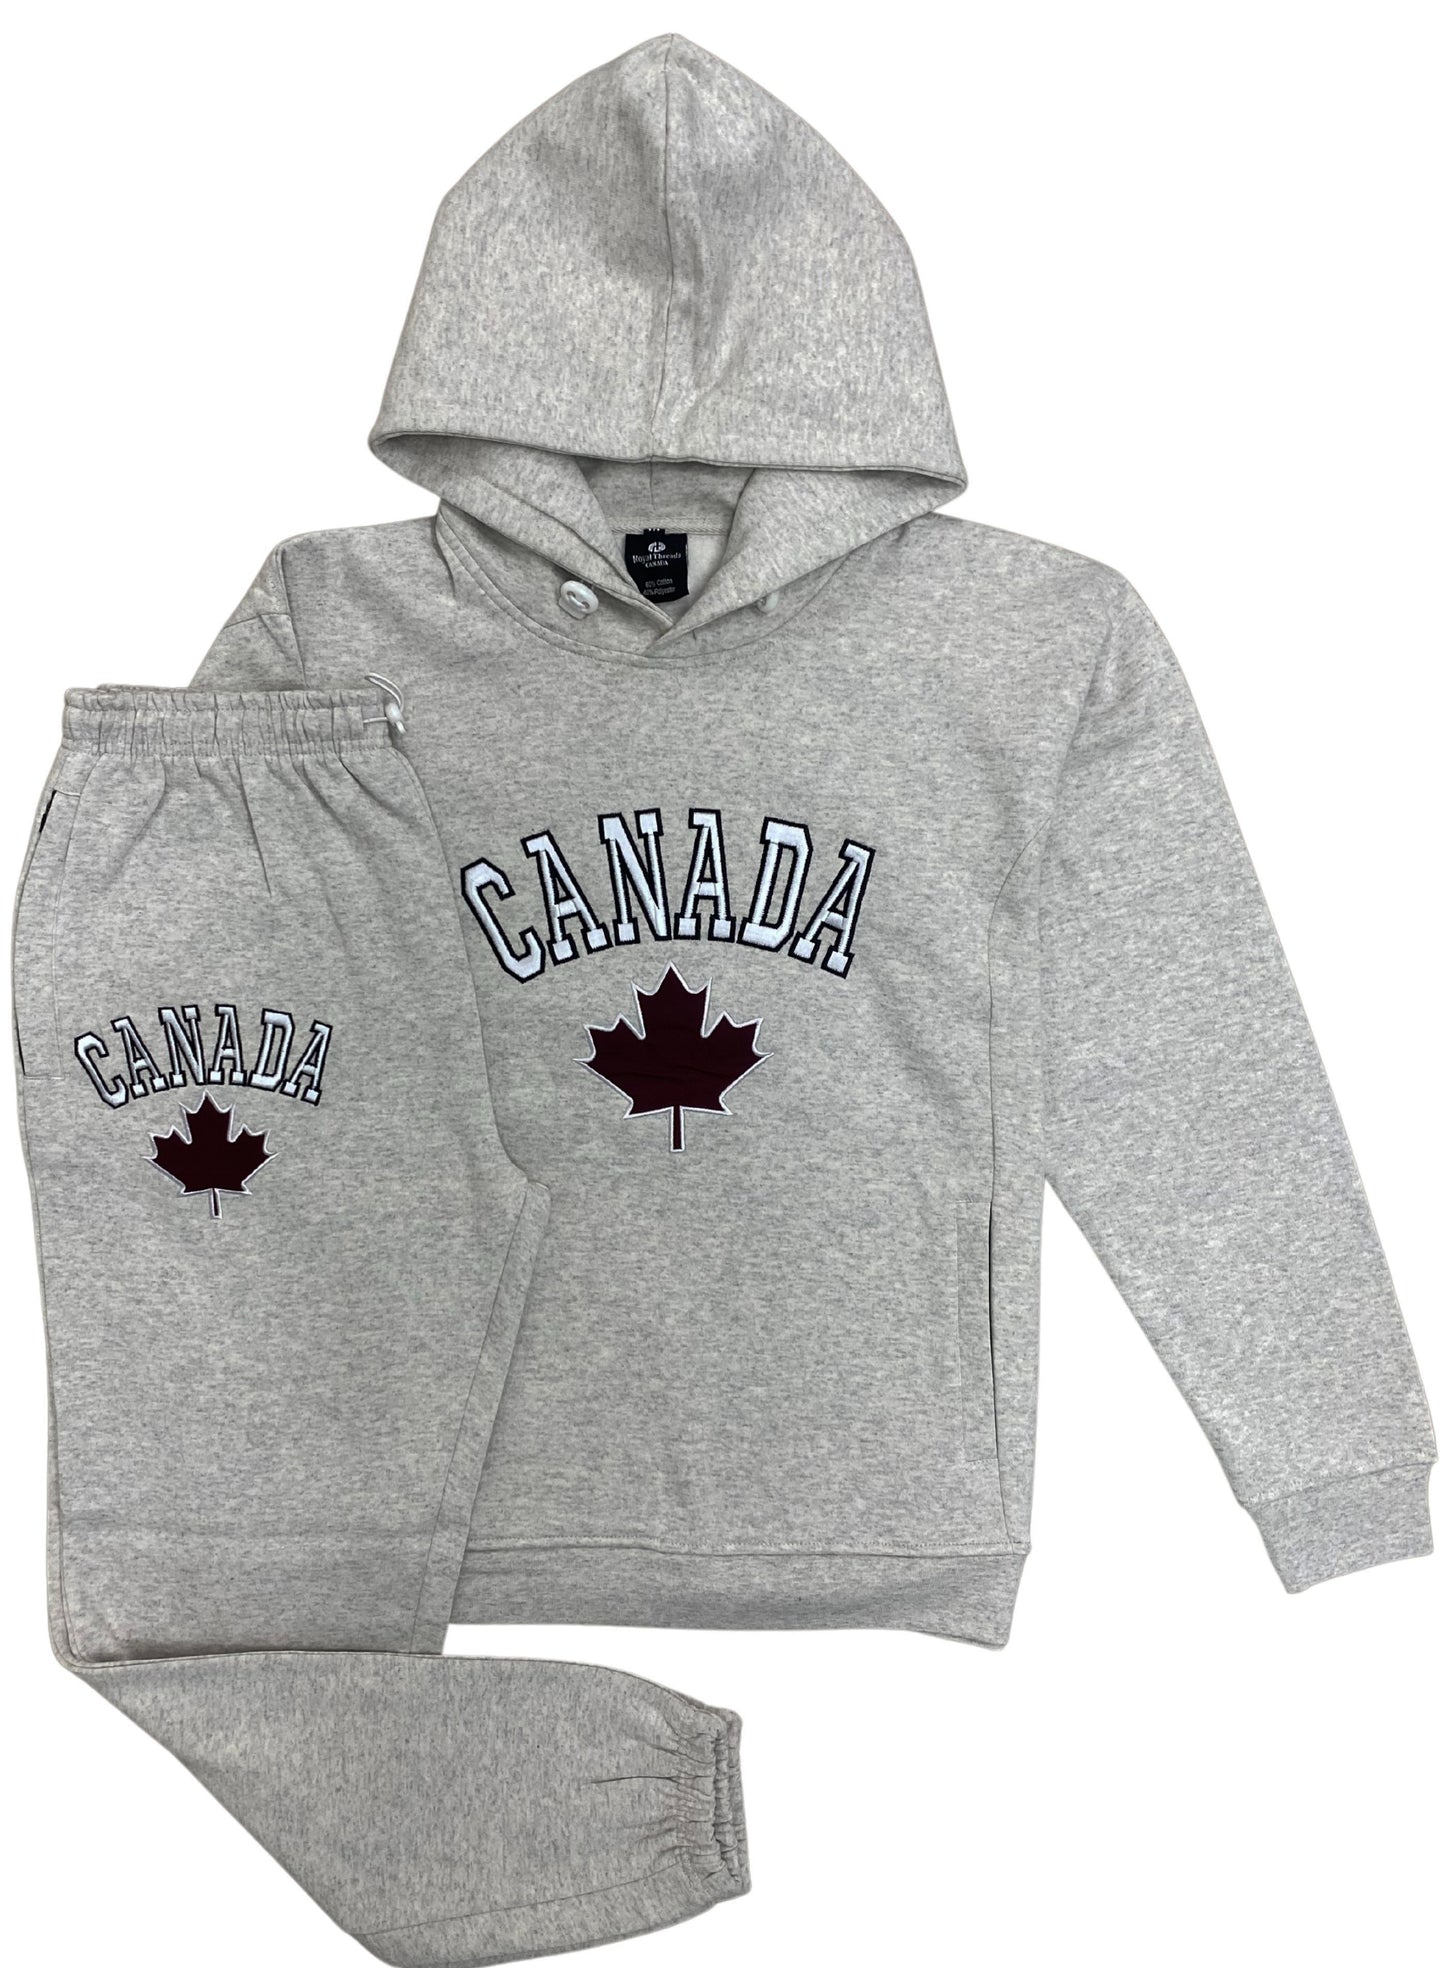 Classic Pullover Canada Print Sweatsuit